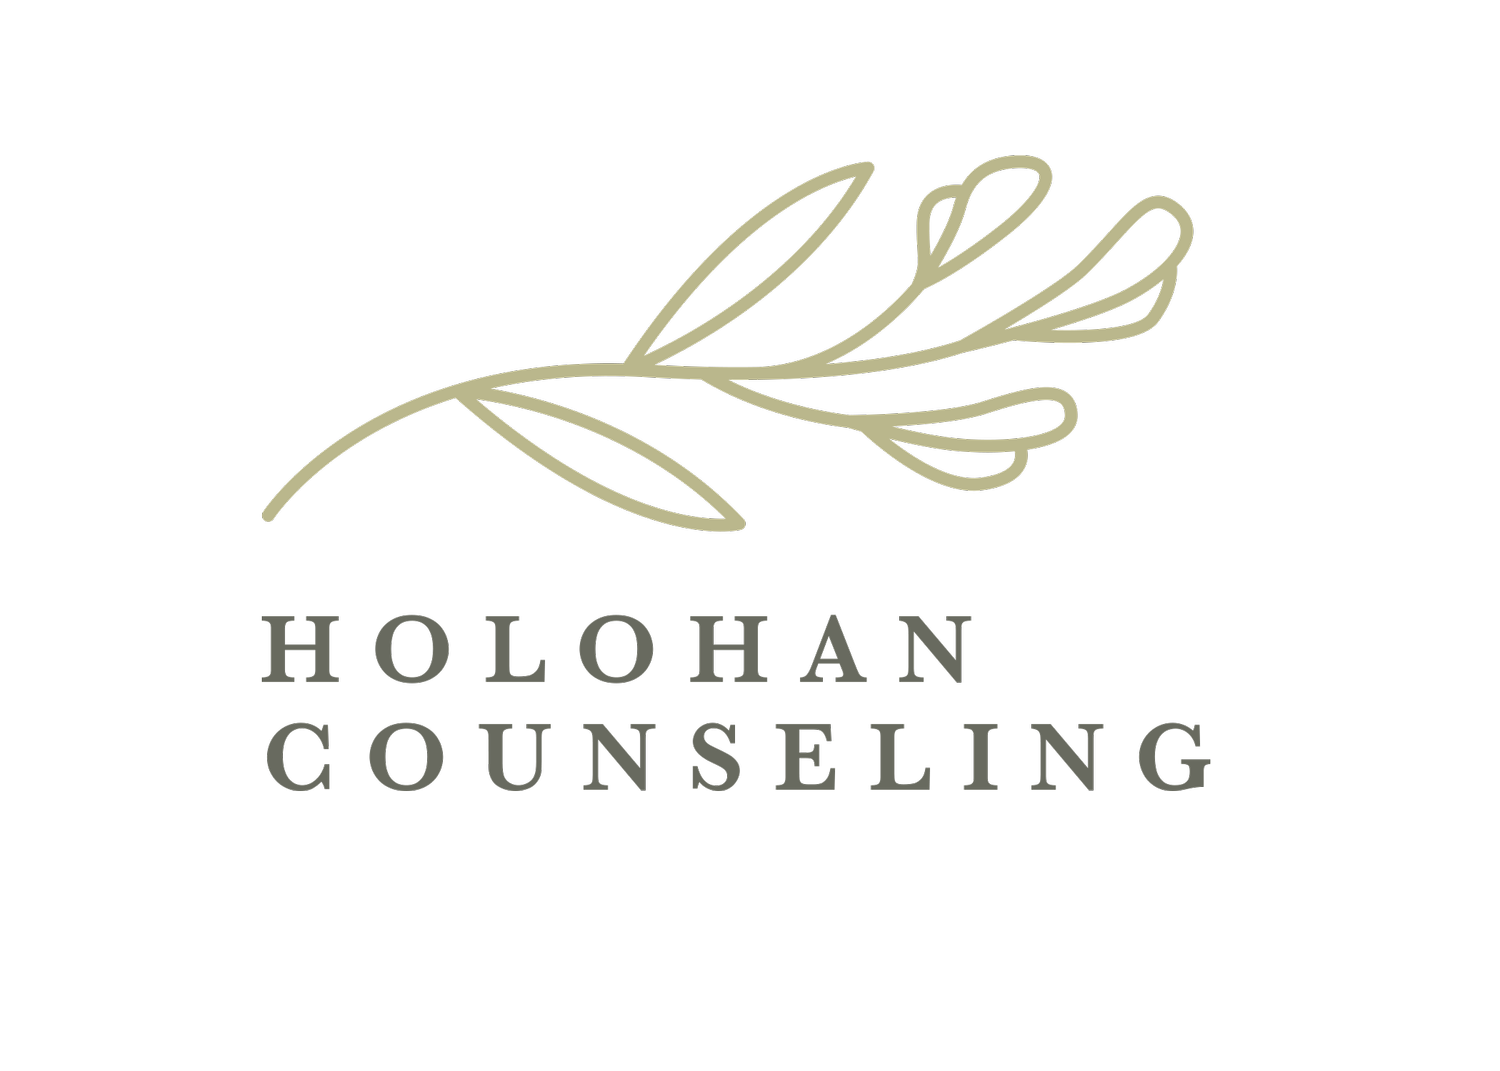 Holohan Counseling